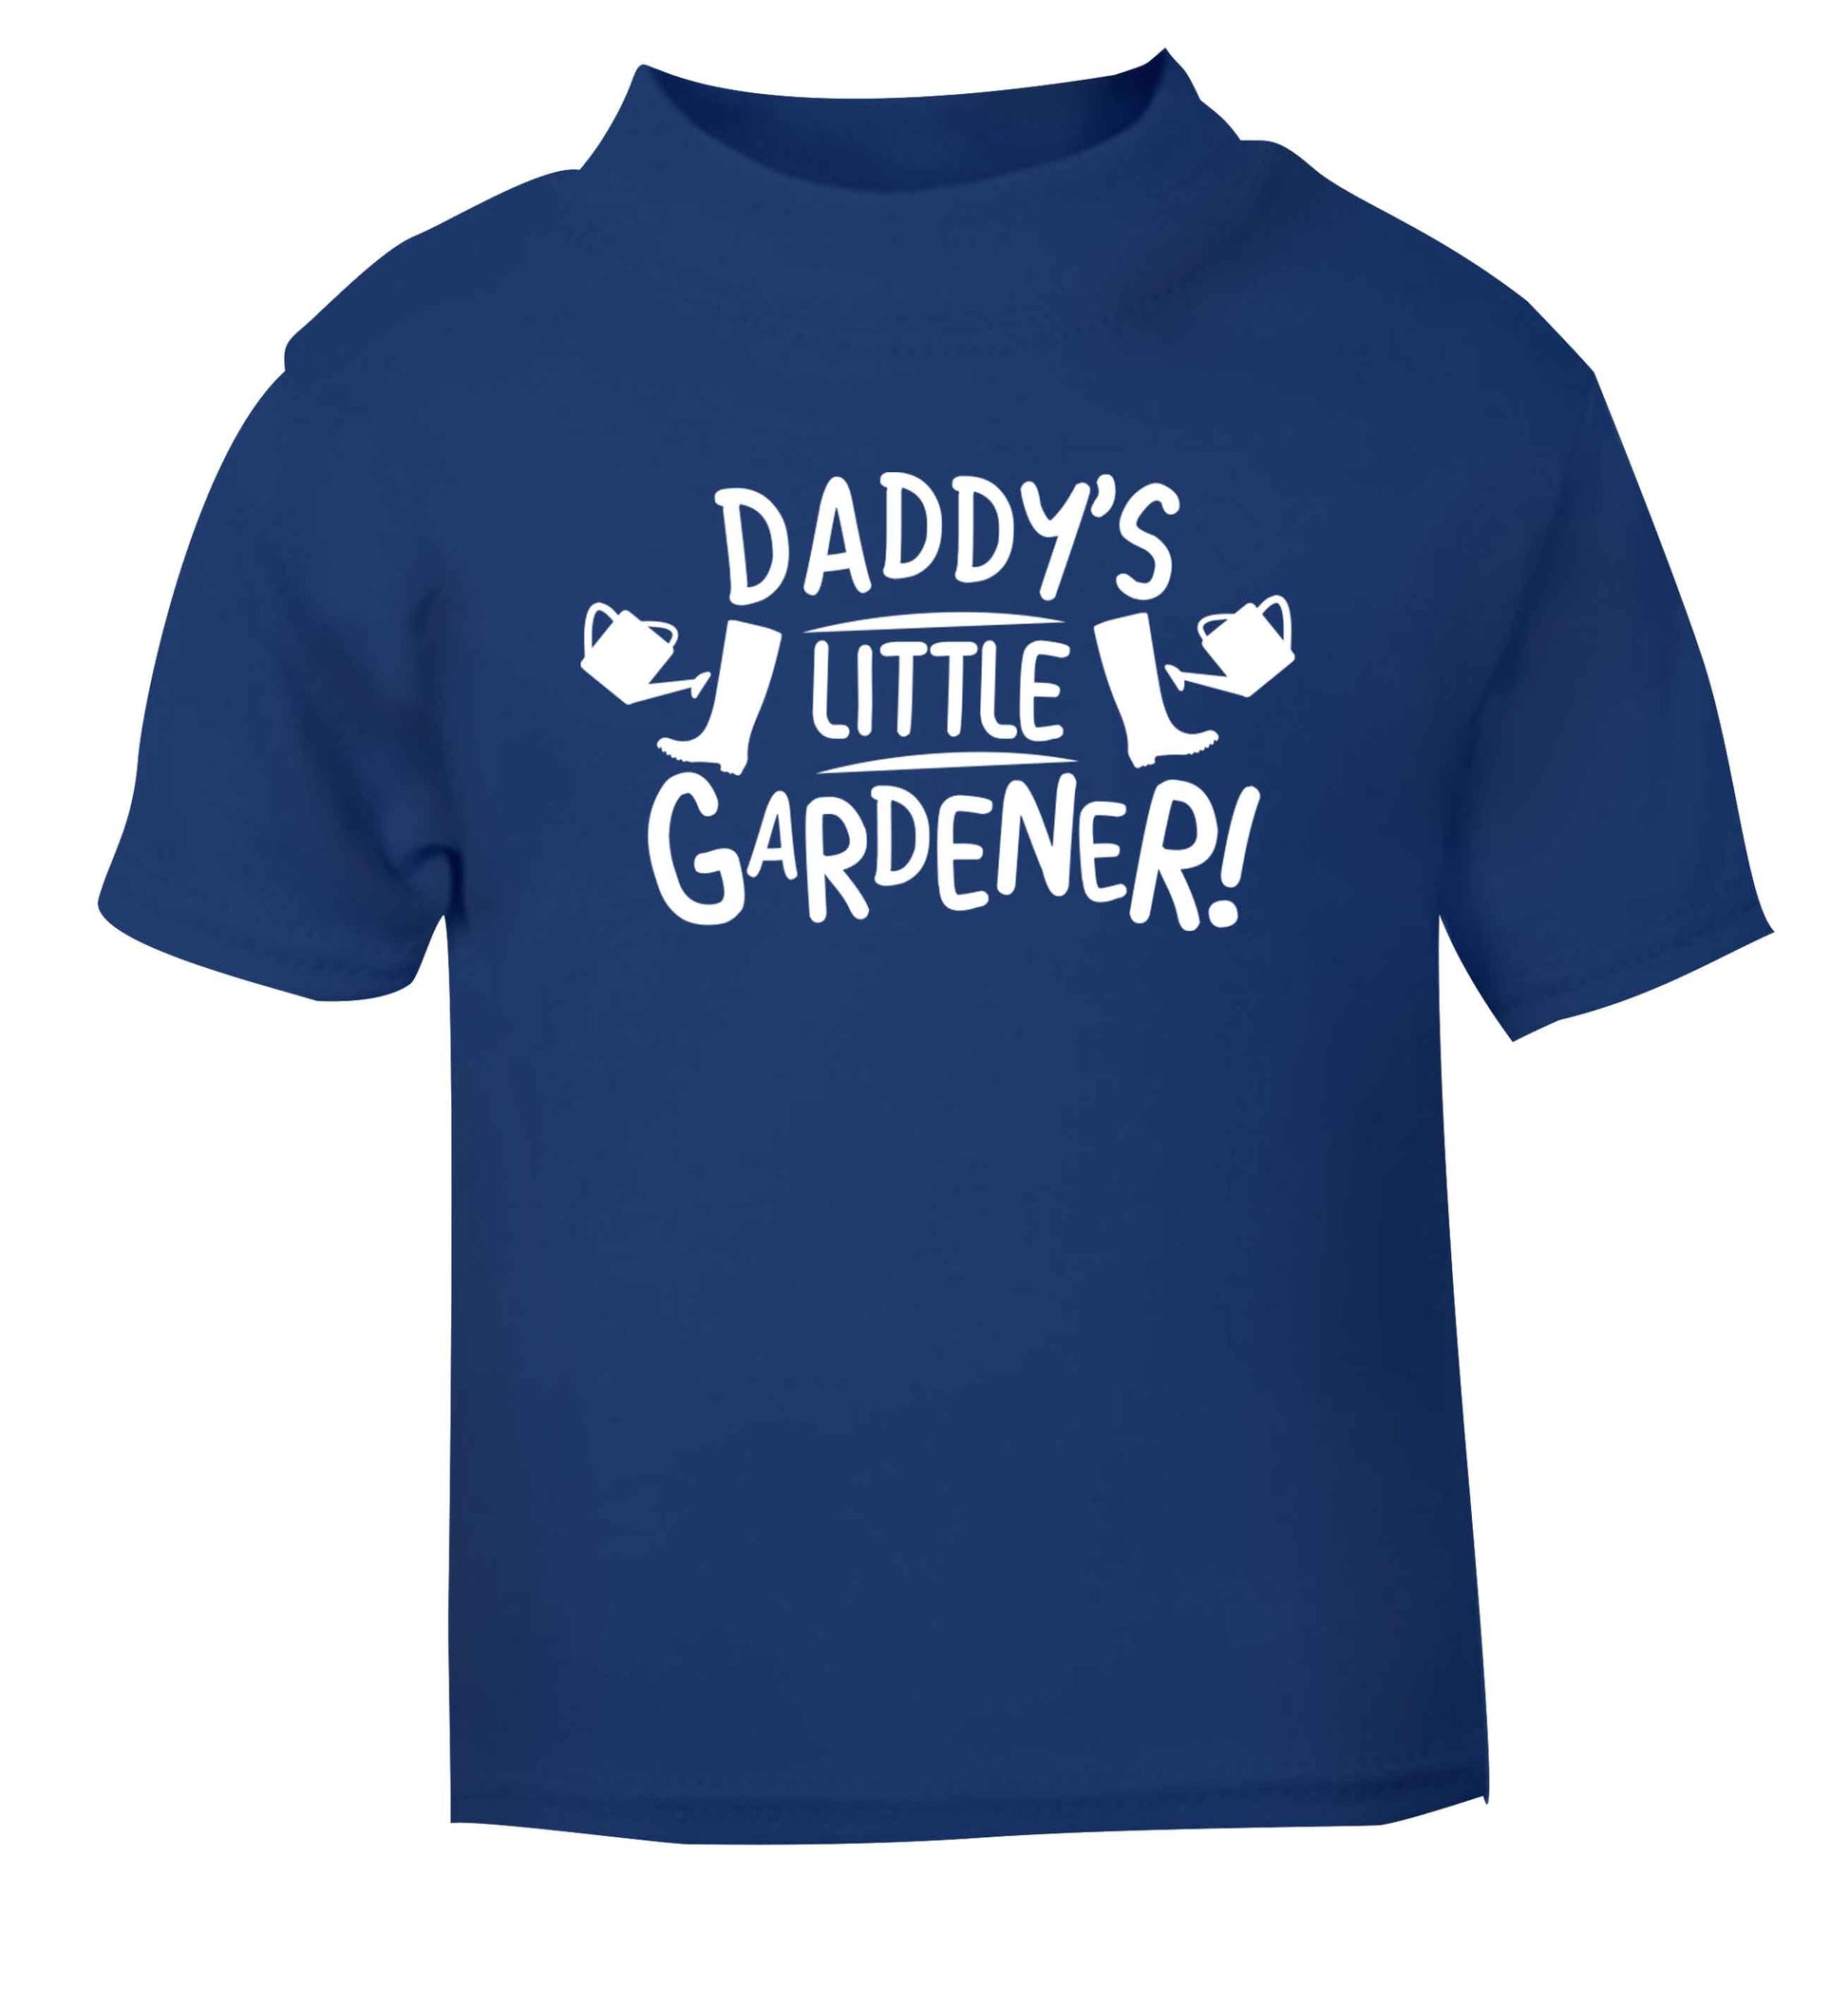 Daddy's little gardener blue Baby Toddler Tshirt 2 Years